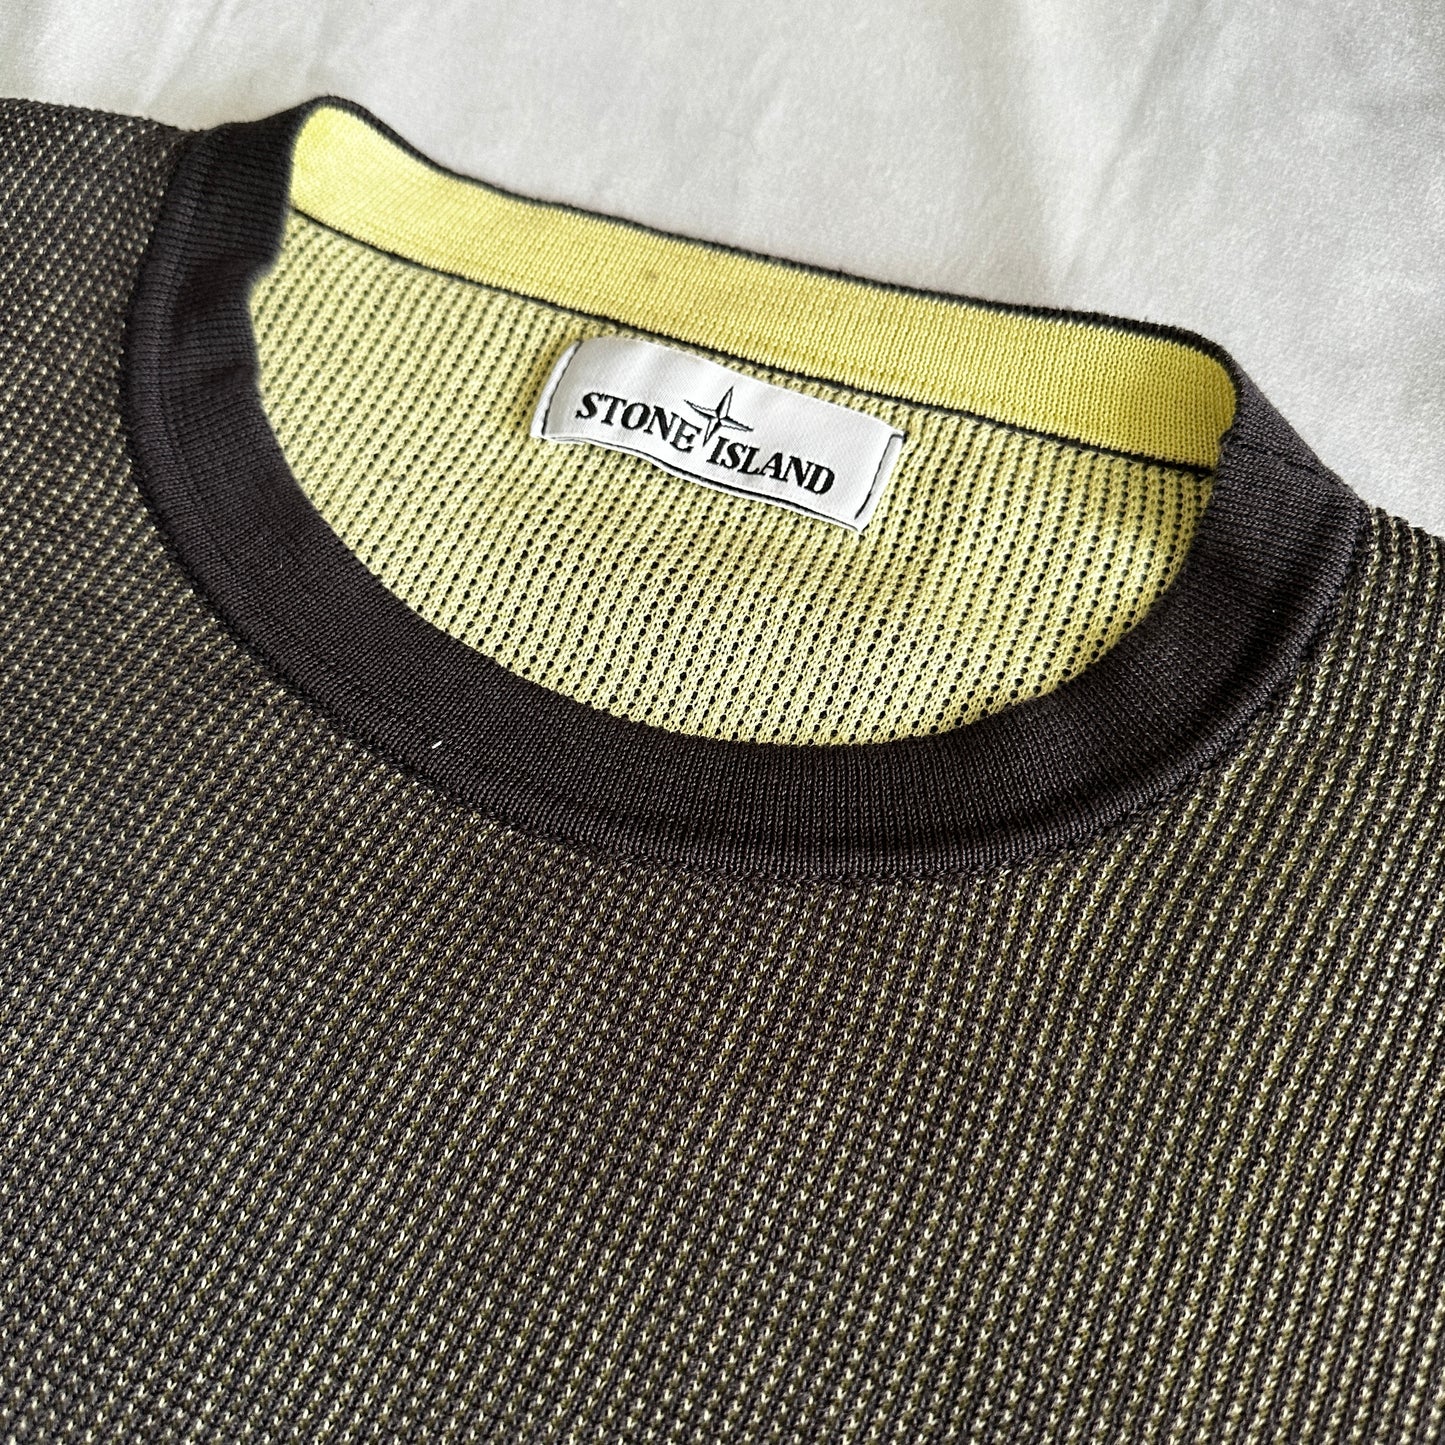 Stone Island Iridescent Two Tone Waffle Knit Crewneck Sweatshirt - M - Made in Italy